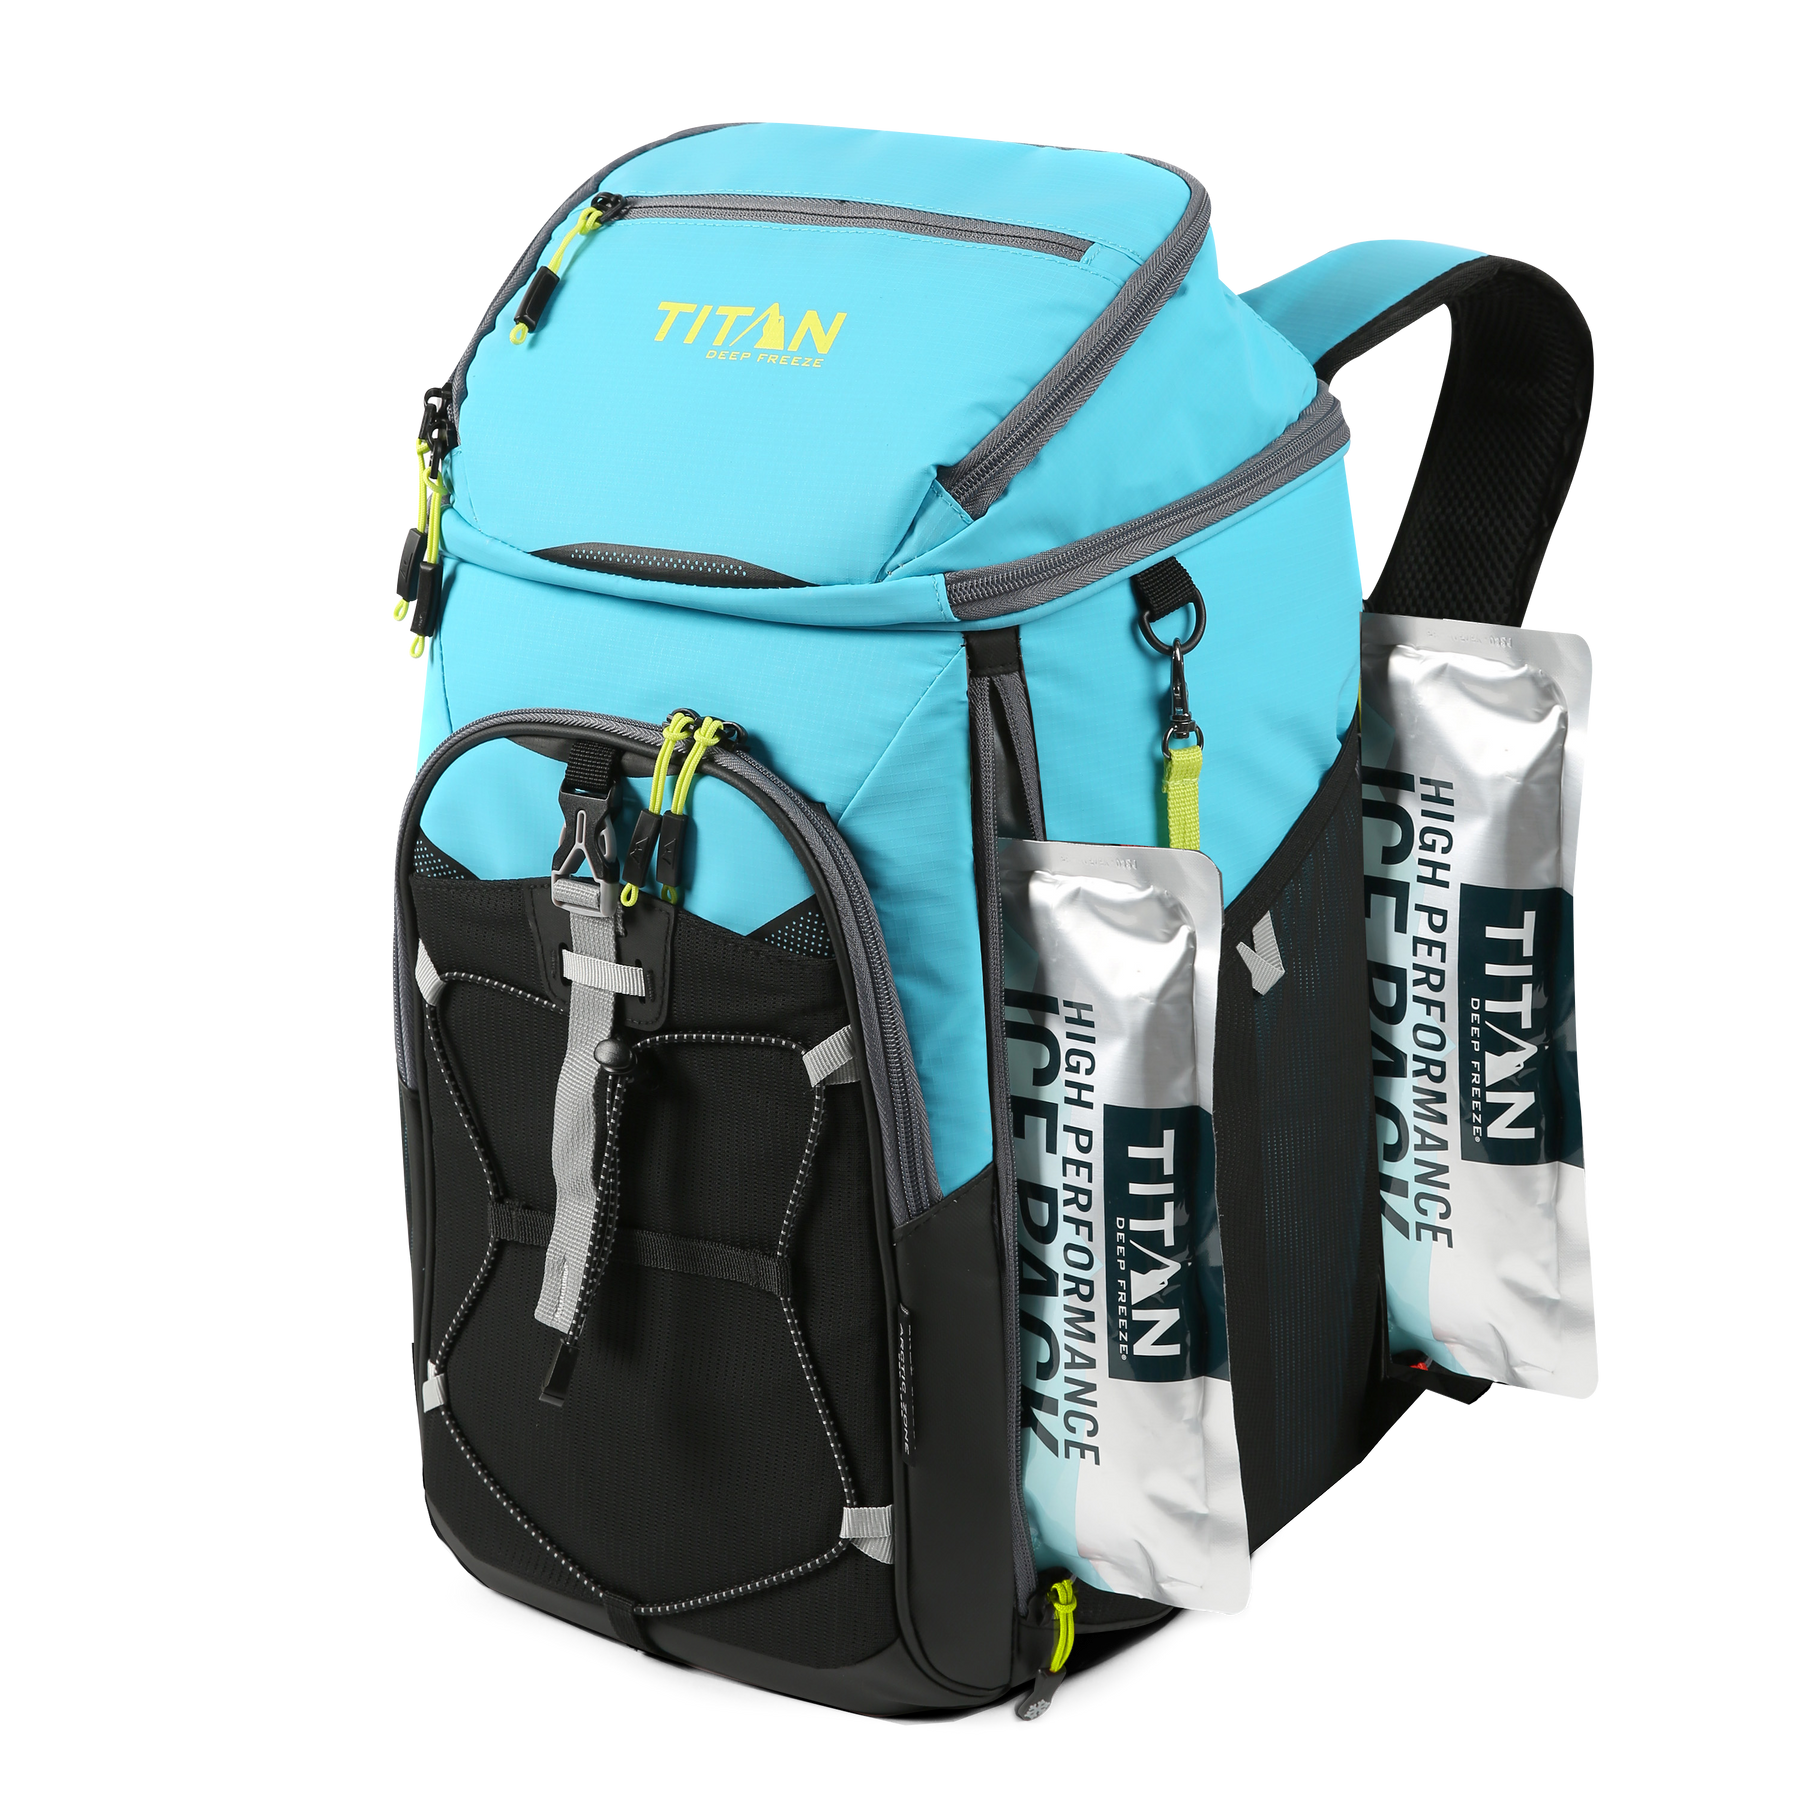 NEW Costco Keep Cool Reusable 4 pack bag HAWAII - 2 Lrg & 2